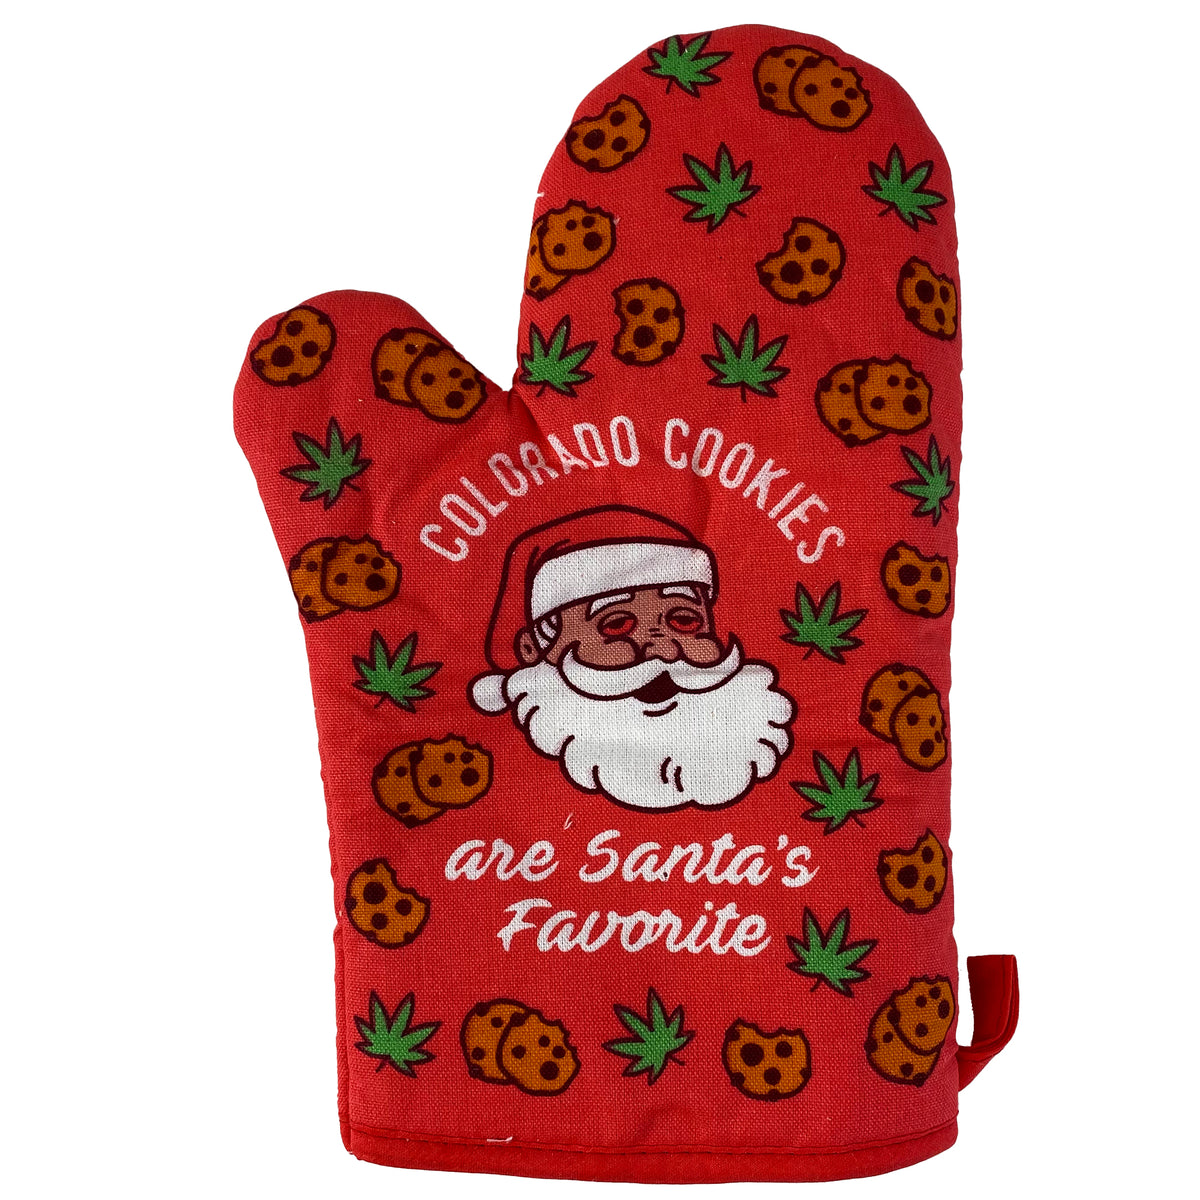 Funny Colorado Cookies Colorado Cookies Nerdy Christmas 420 Tee